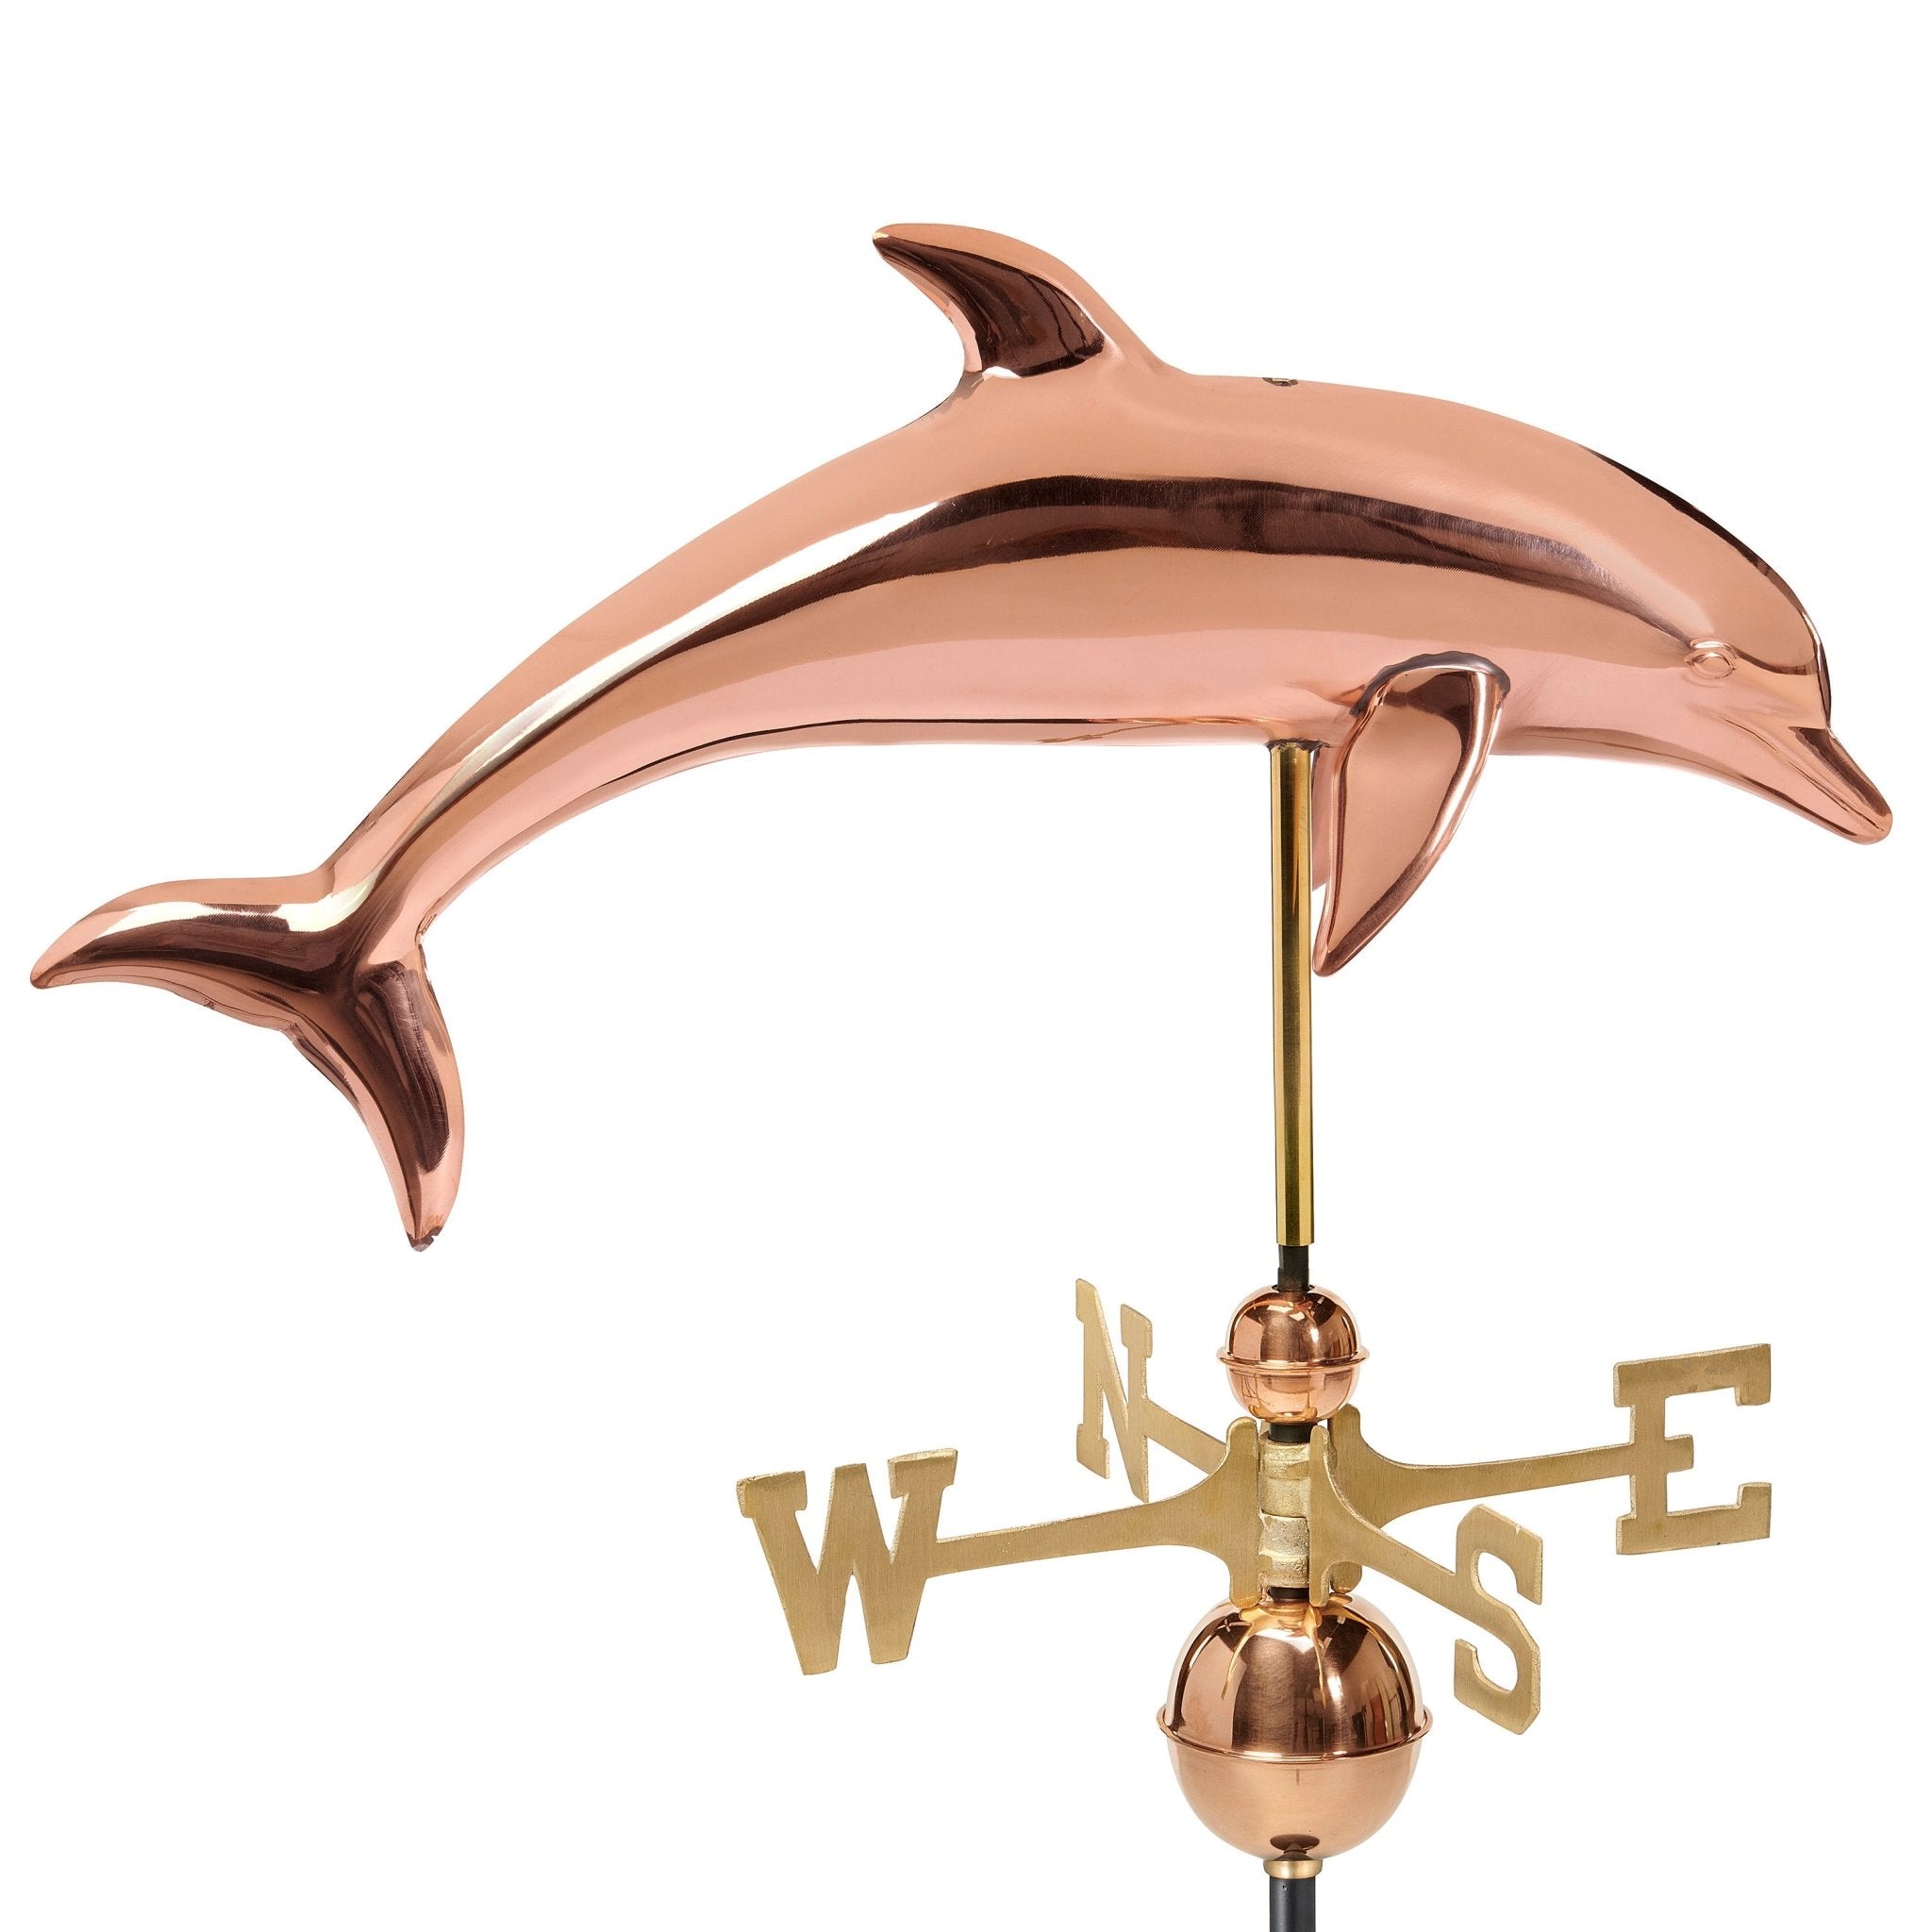 Dolphin Weathervane - Good Directions